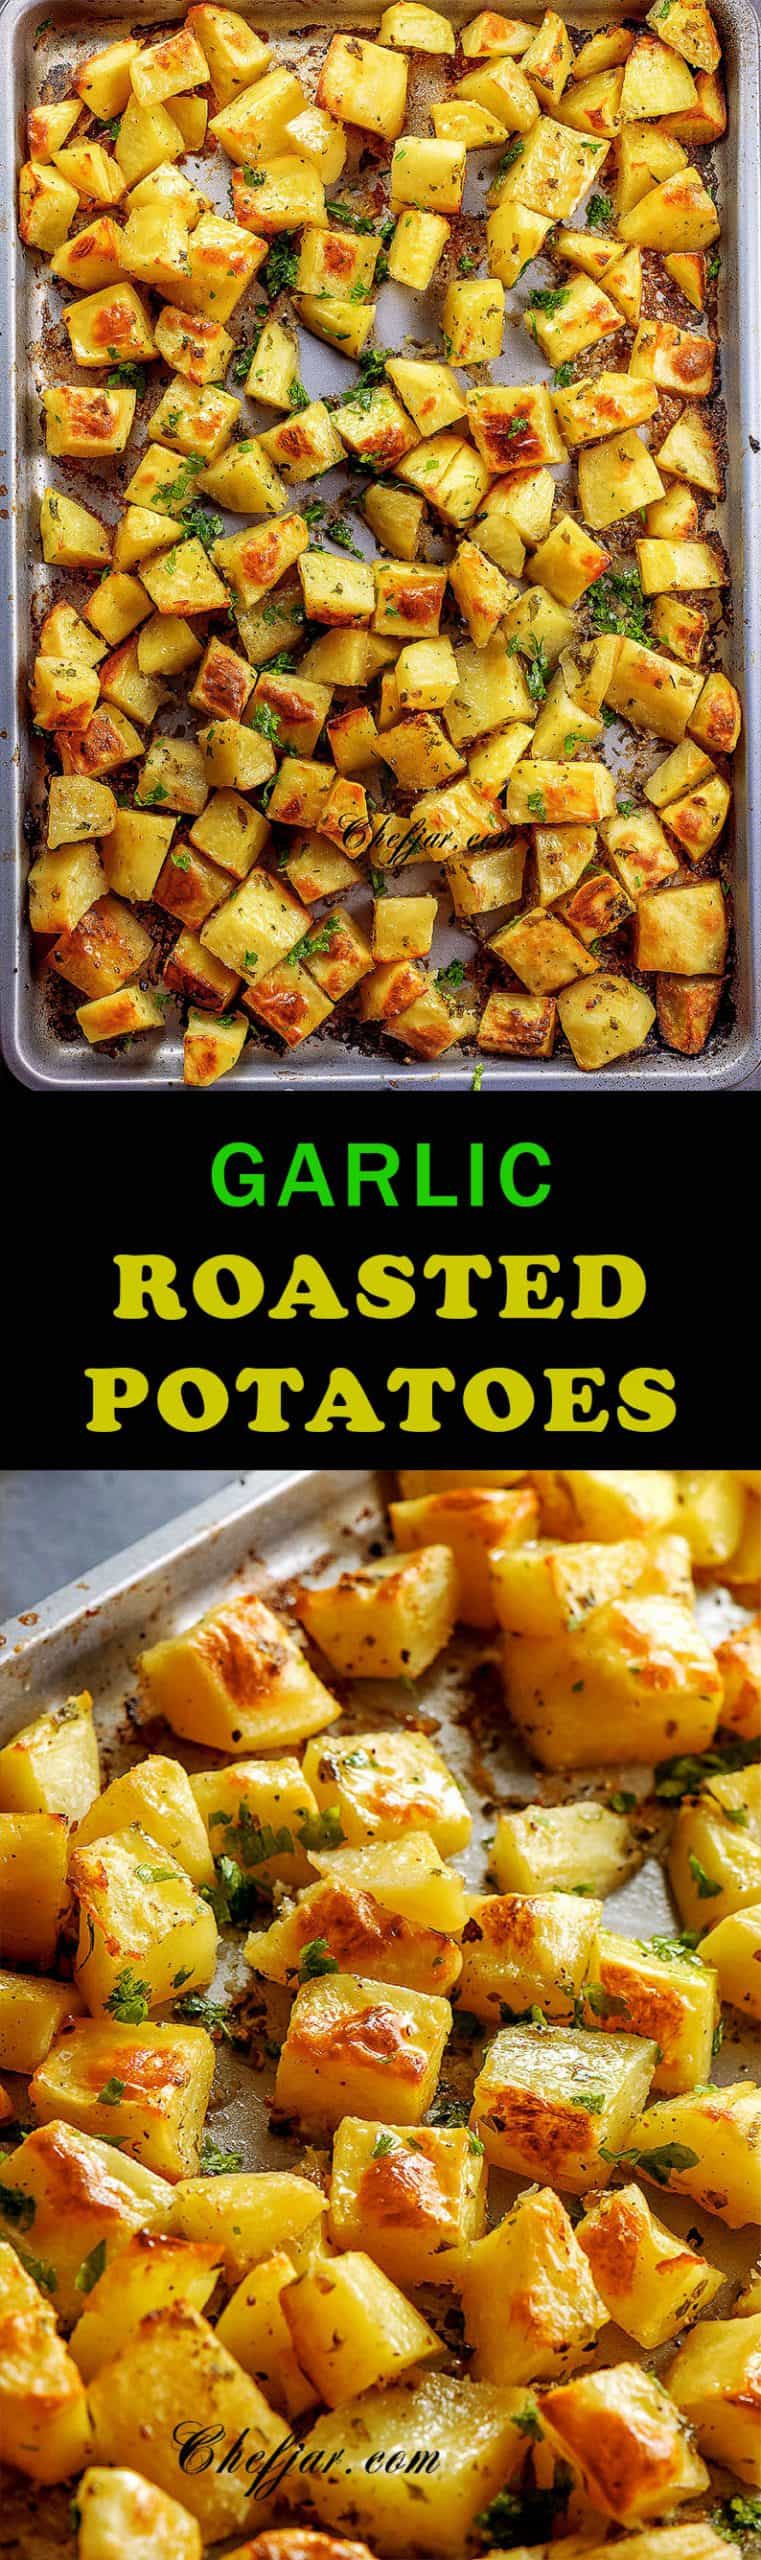 garlic-roasted-potatoes